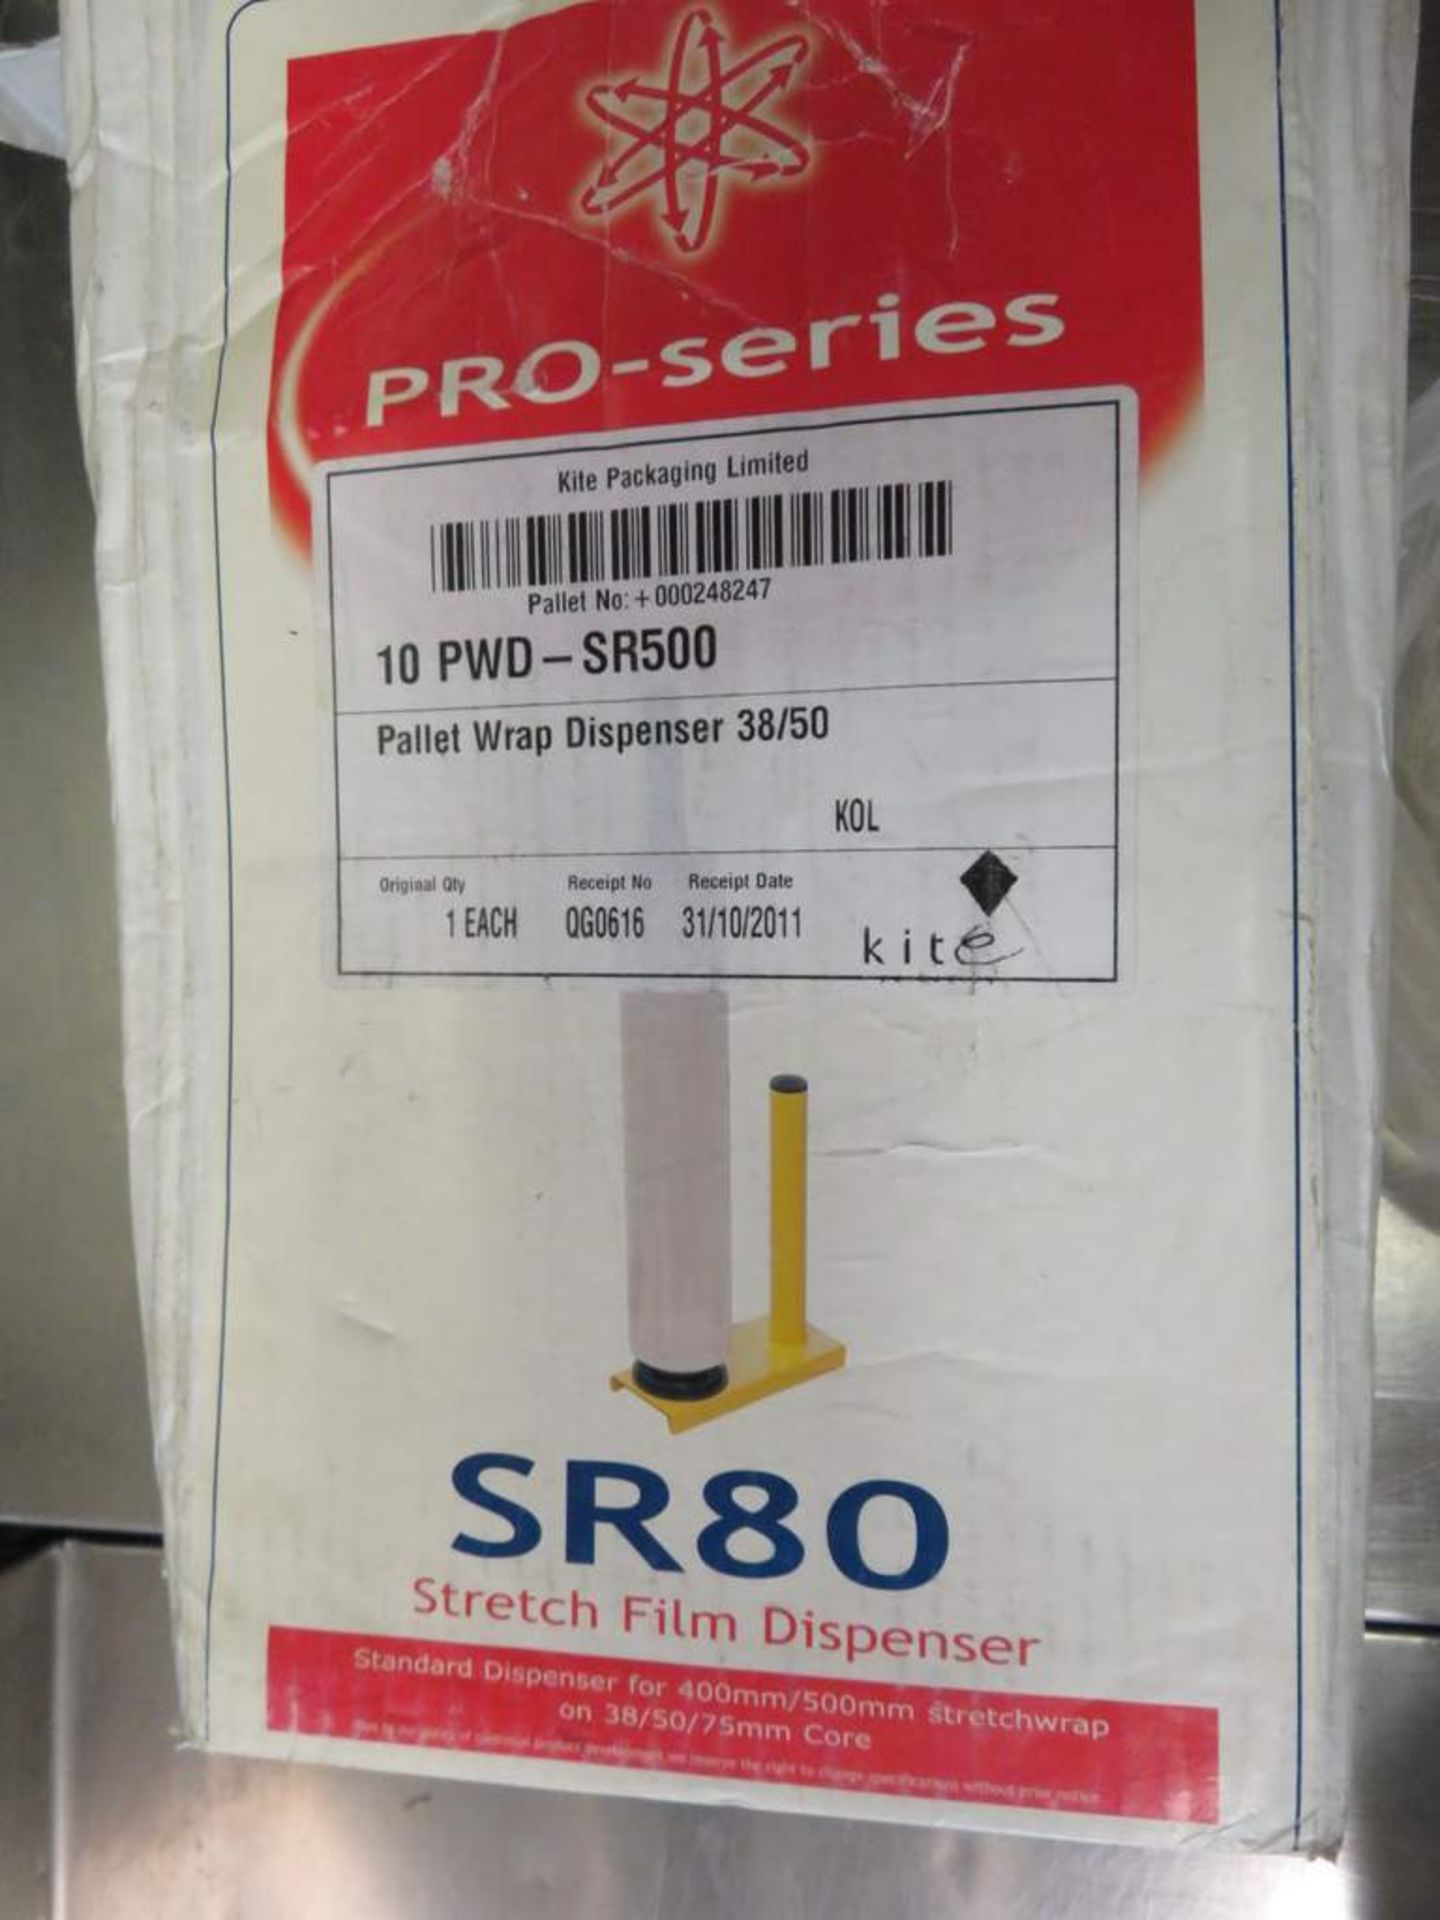 2x Pallet wrap film dispensers. Model: SR80. Unused in box. - Image 2 of 2